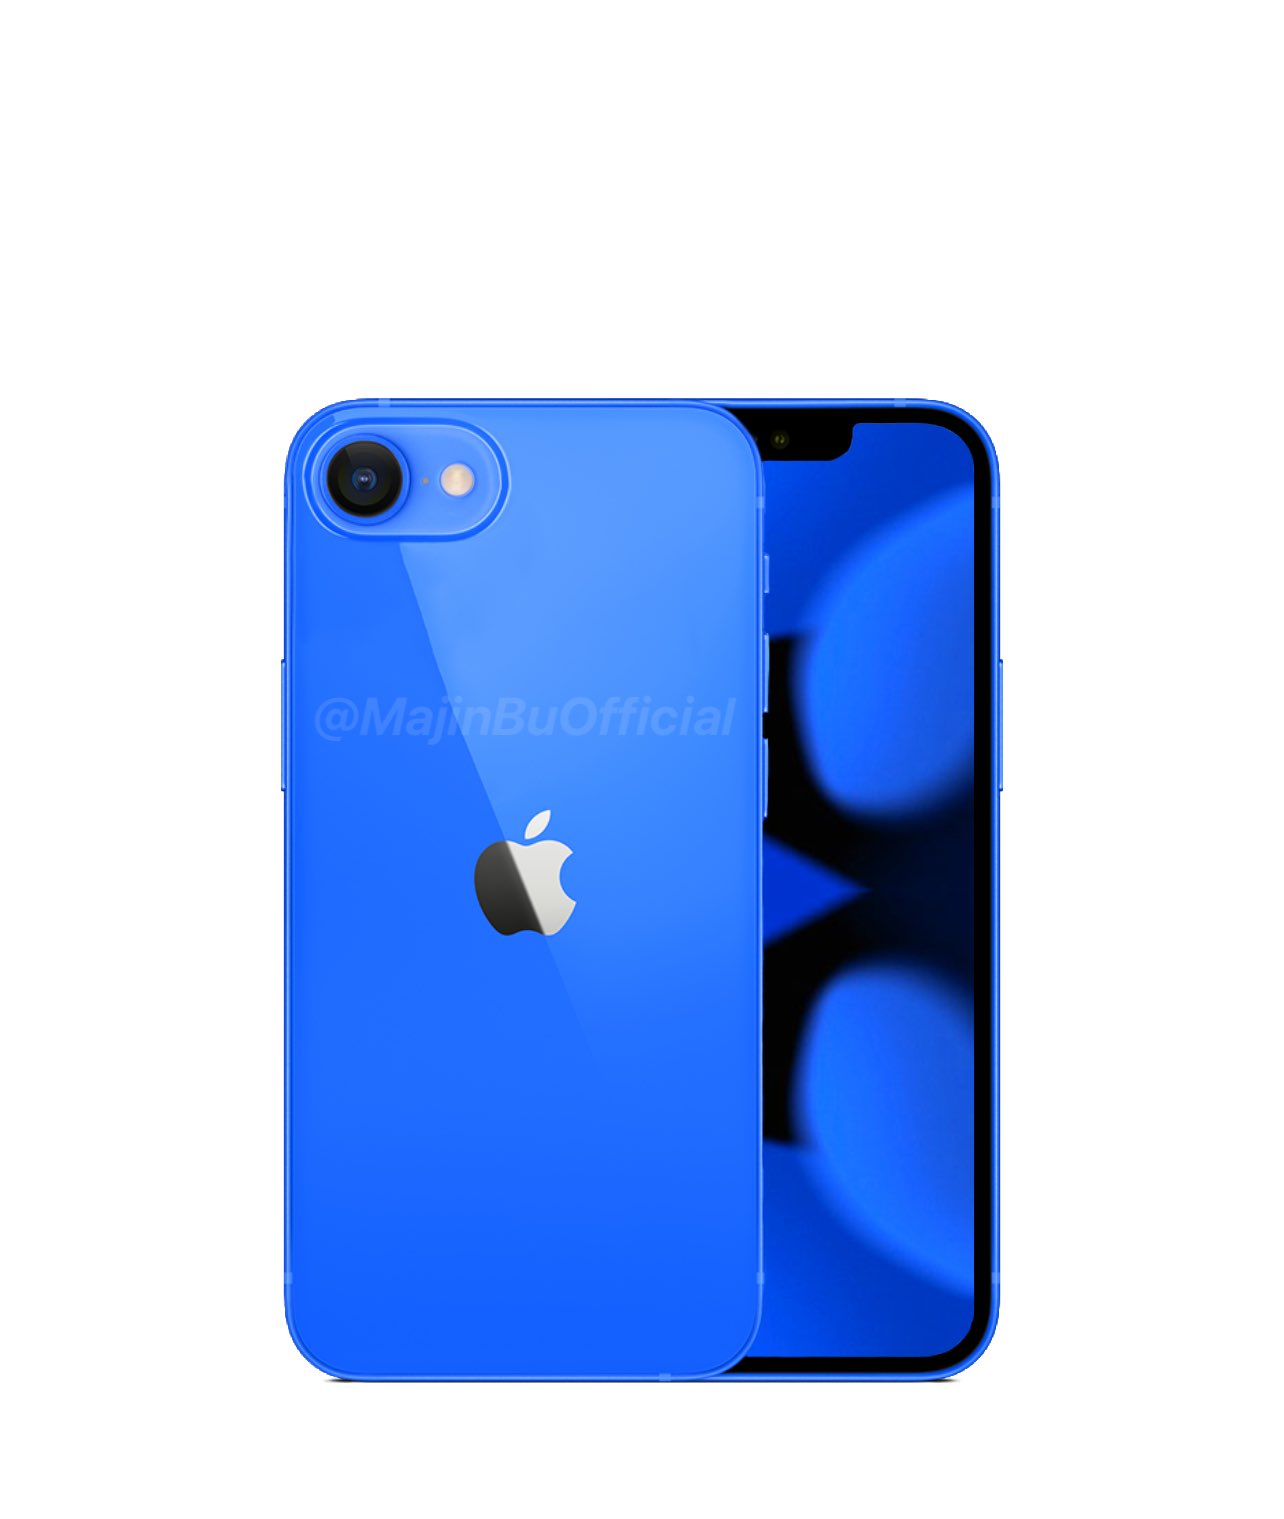 Majin Bu Iphone Se 3 Lineup Concept Apple Appleconcept Iphonese3 T Co Scej9leurh Twitter